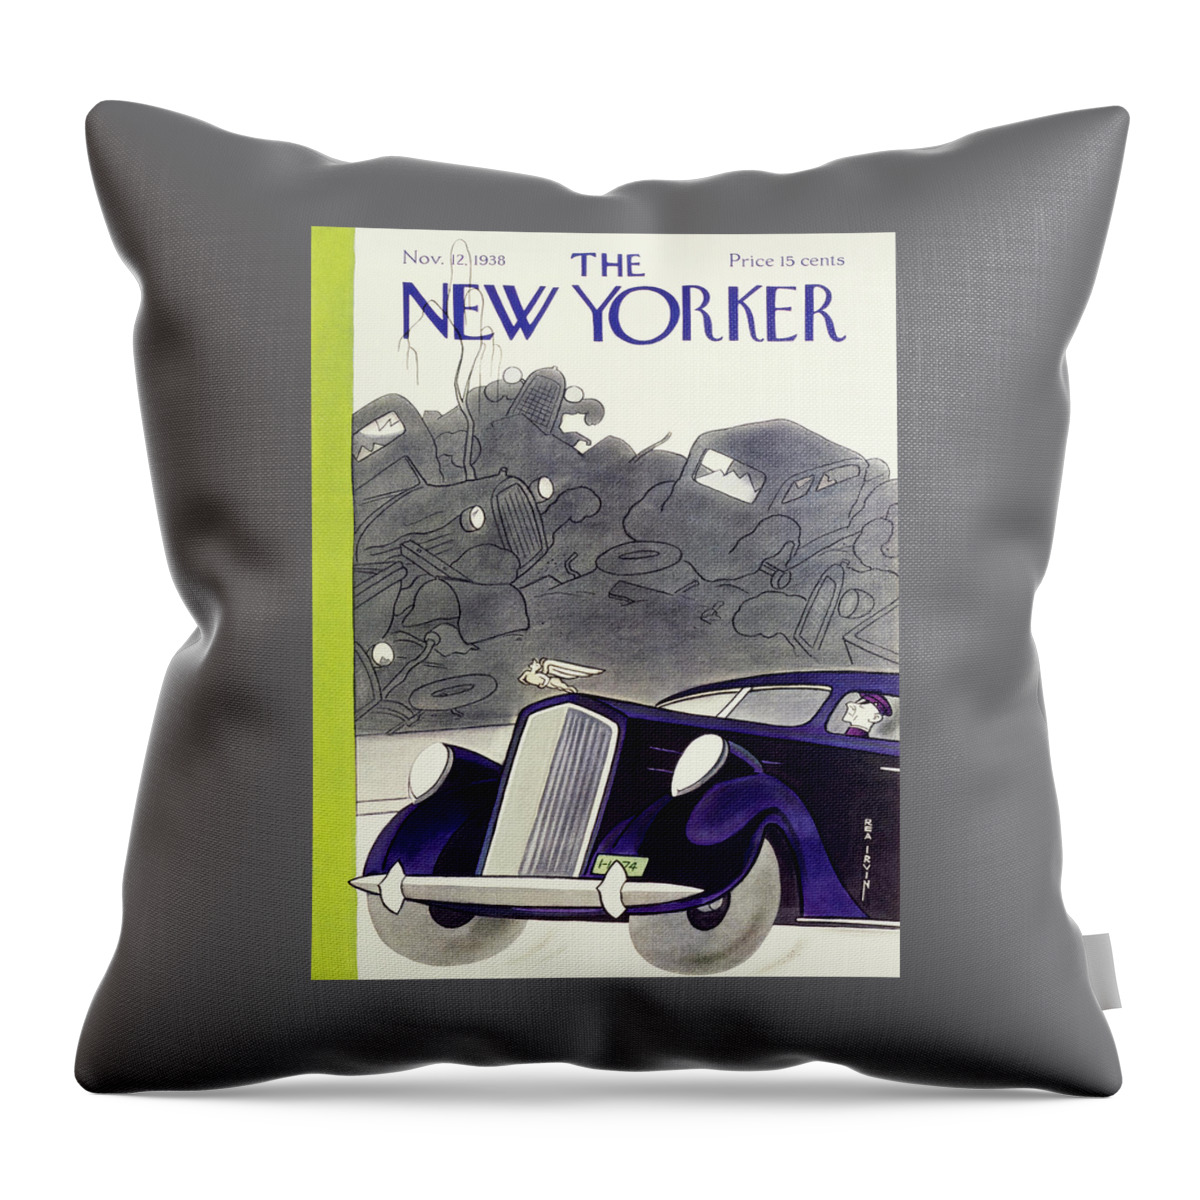 New Yorker November 12 1938 Throw Pillow